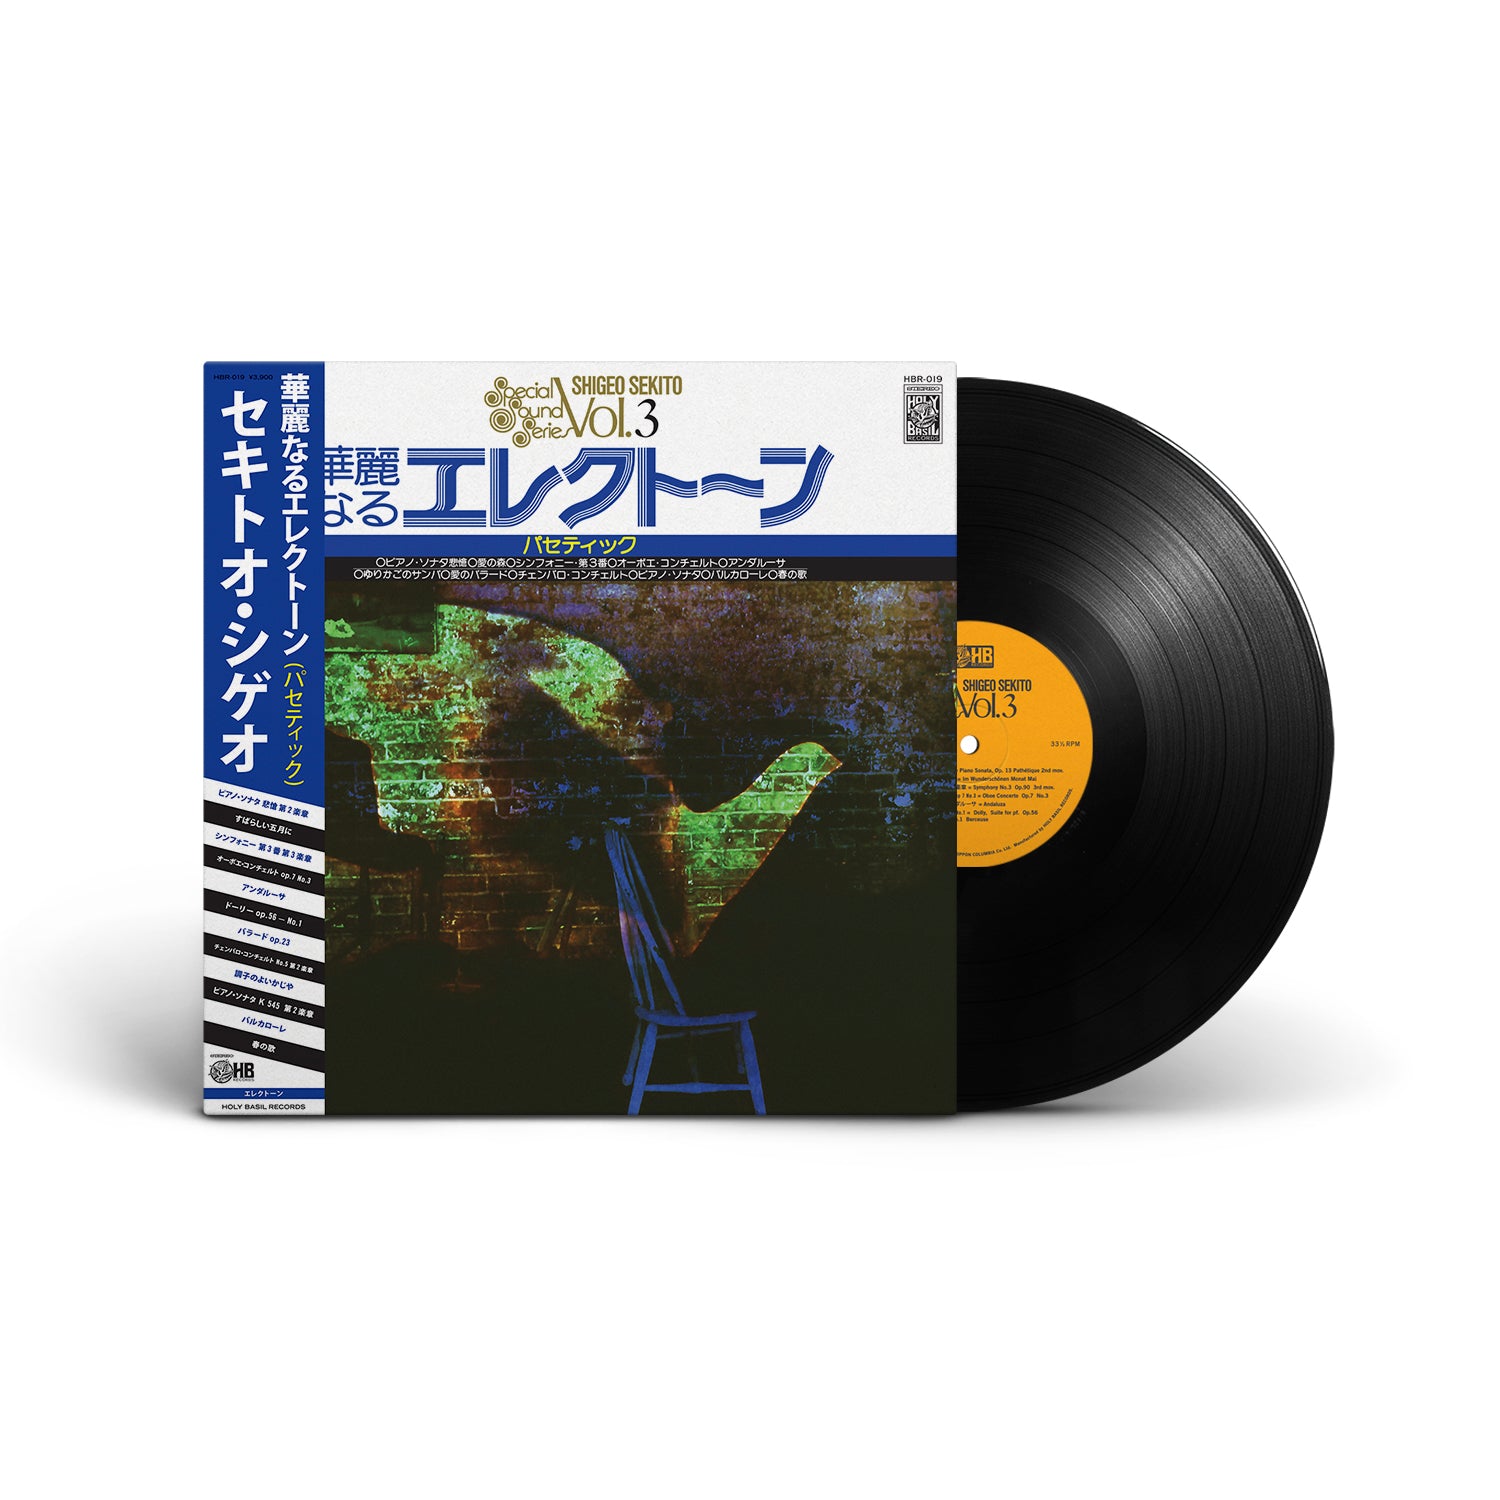 Shigeo Sekito - Special Sound Series Vol. 3 (Vinyl LP)